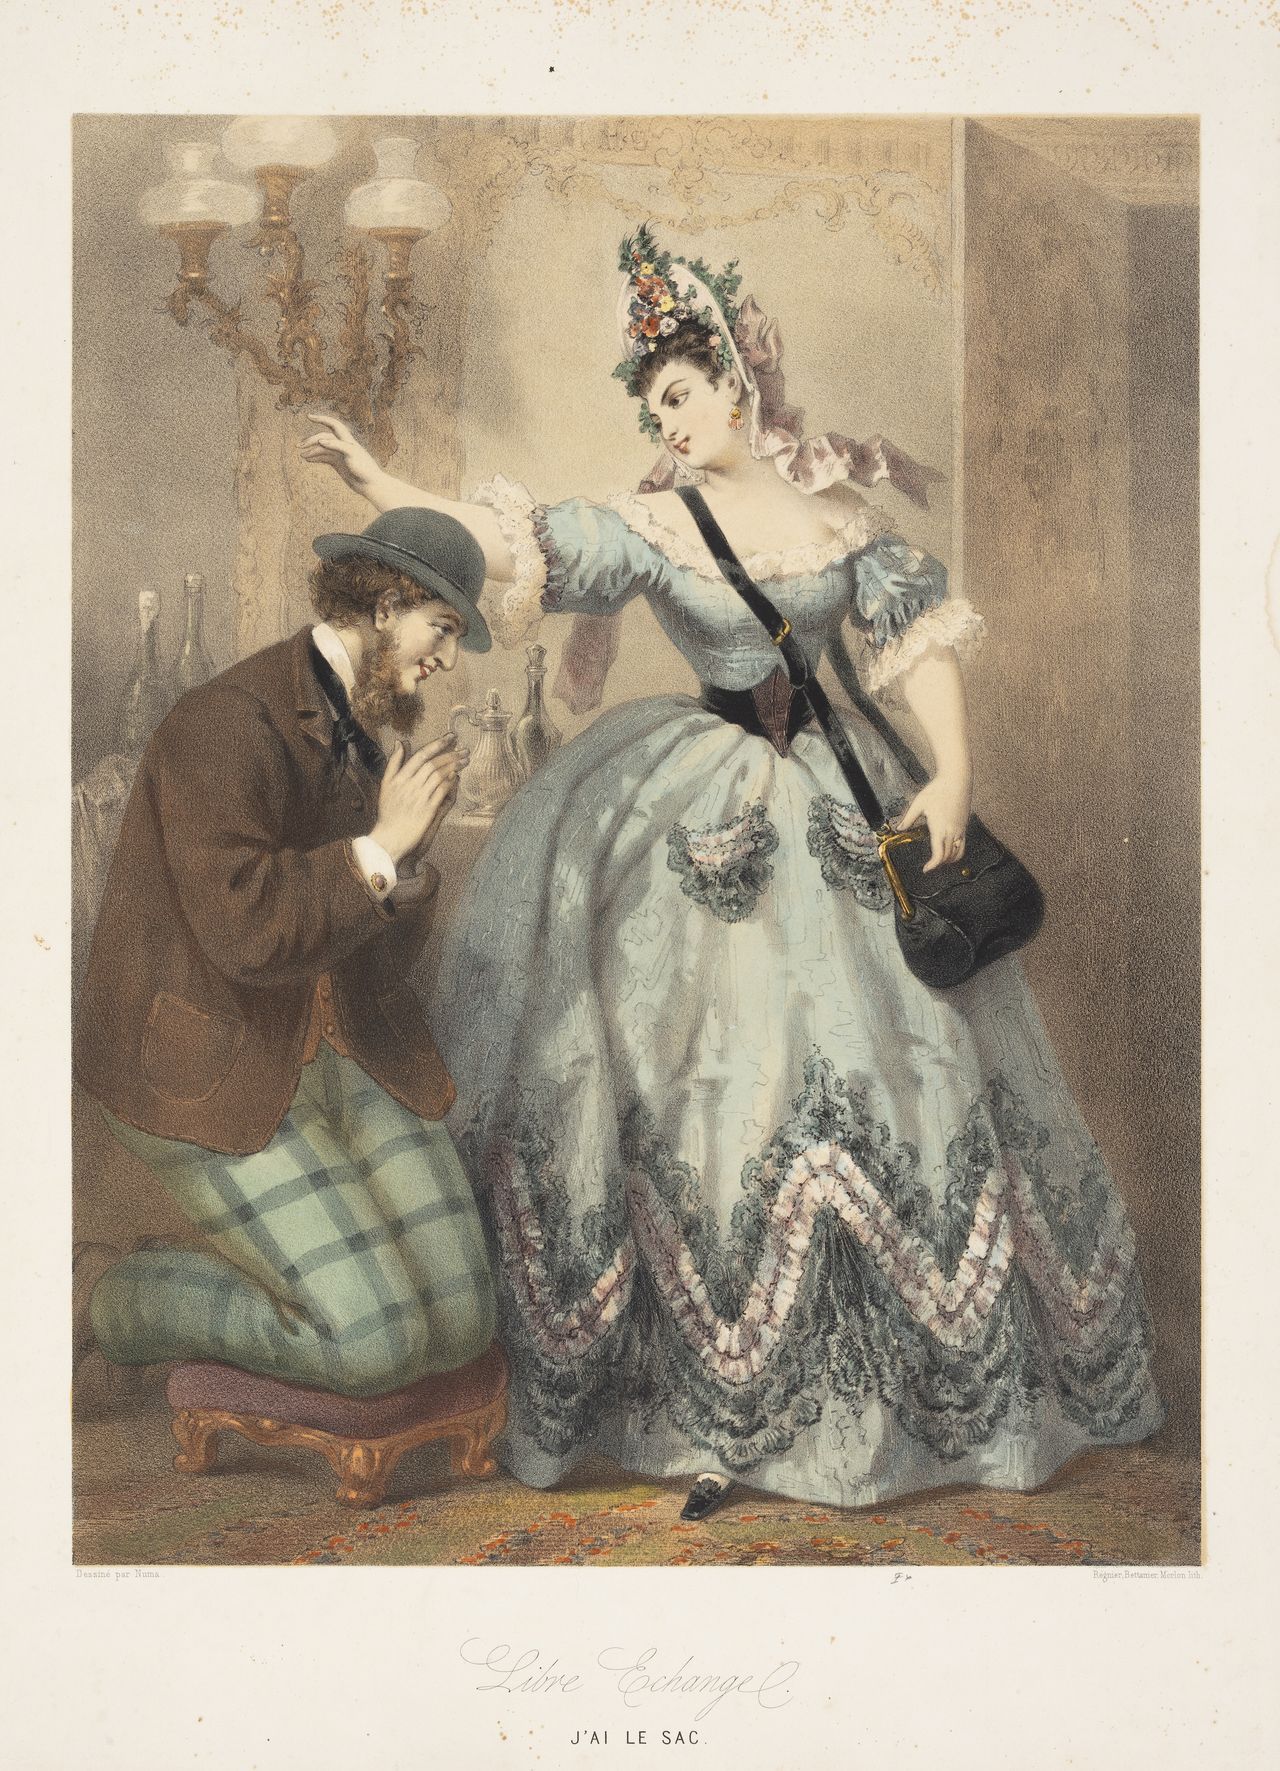 The Dark Underbelly: Prostitution in 19th Century France